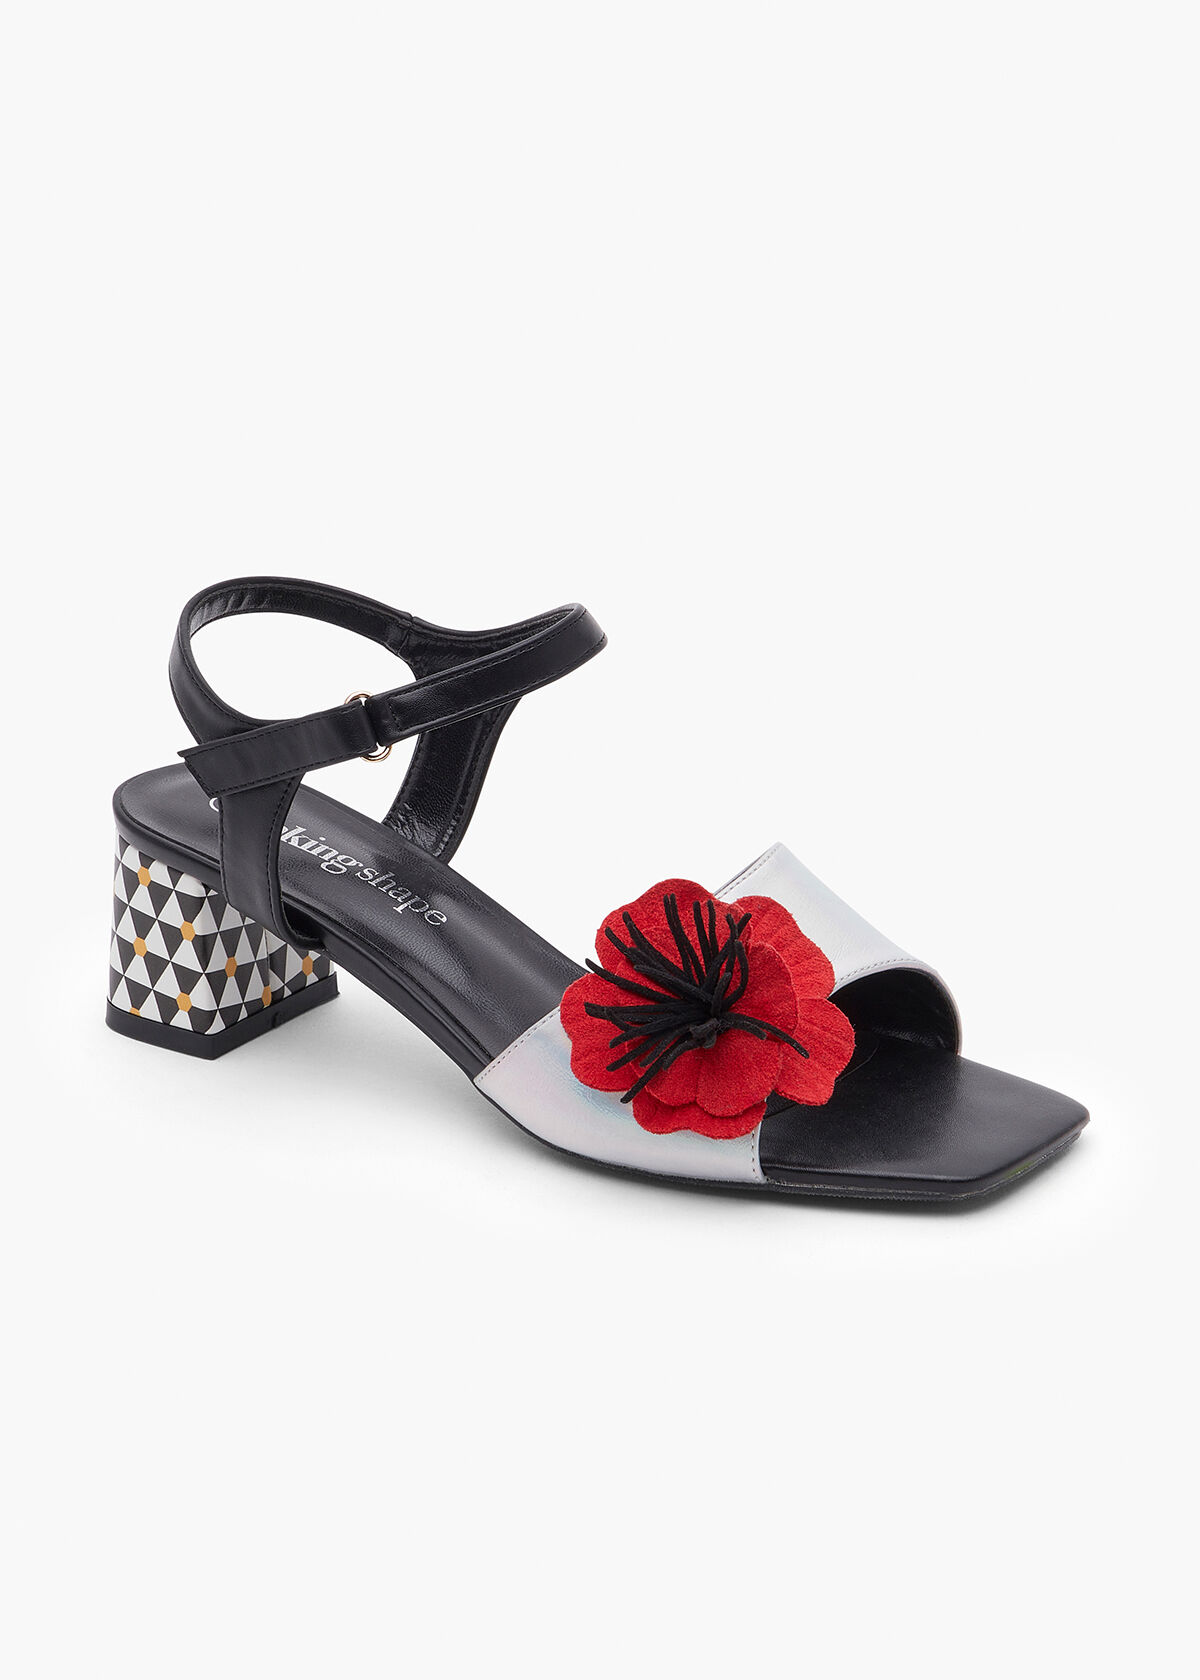 Vintage New Womens Girls Floral Block High Heel Slip on Classic Pumps Shoes  | eBay